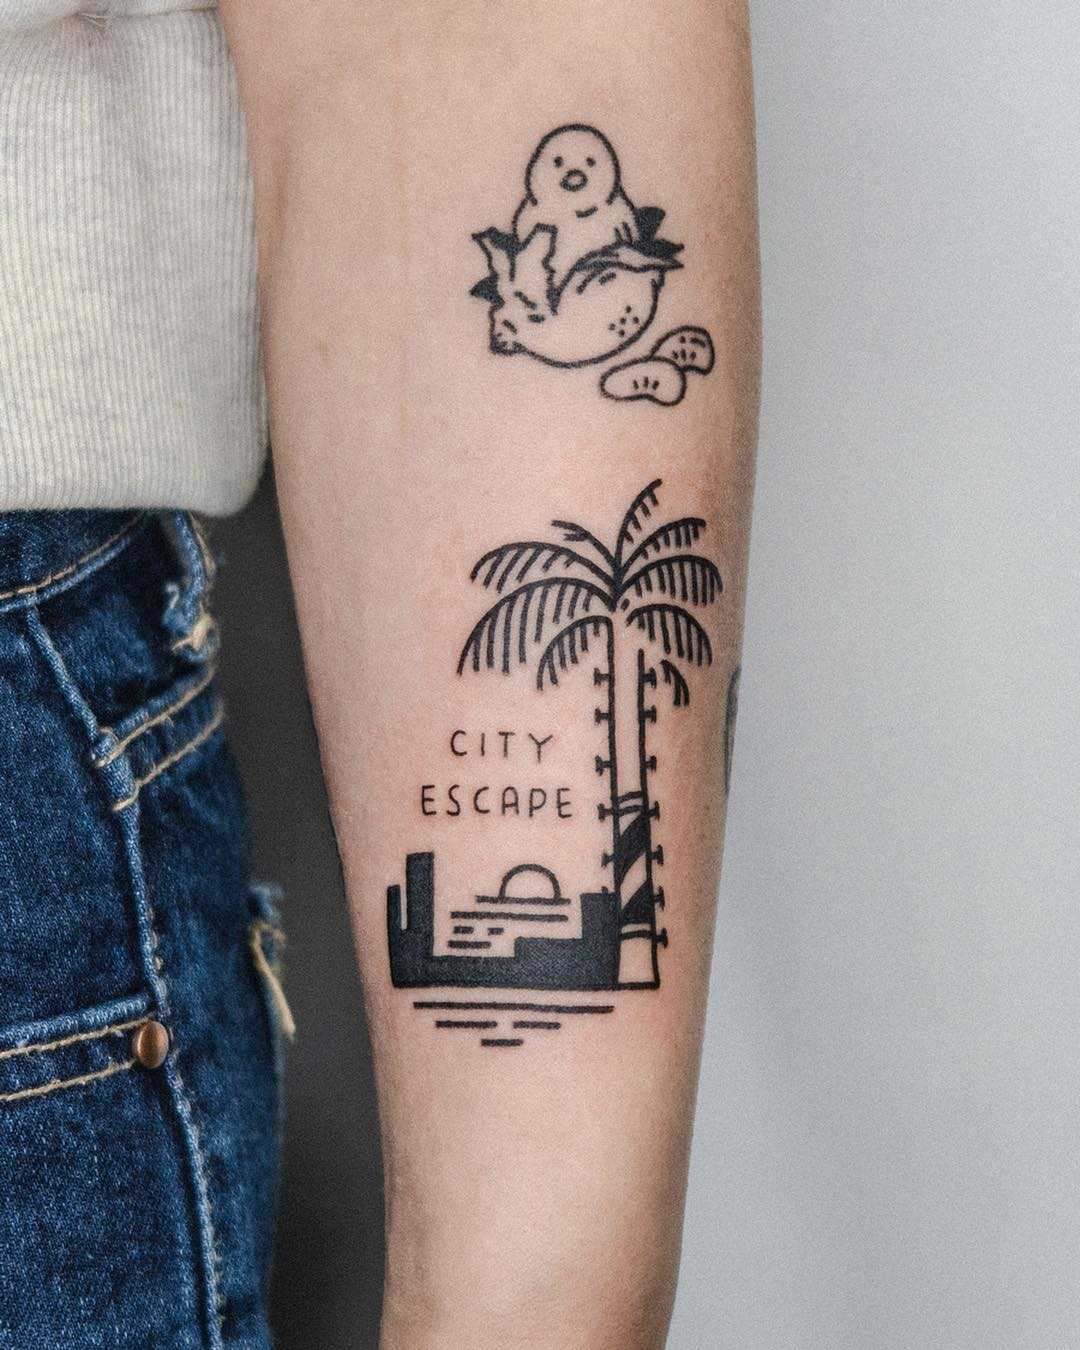 City escape by tattooist Bongkee